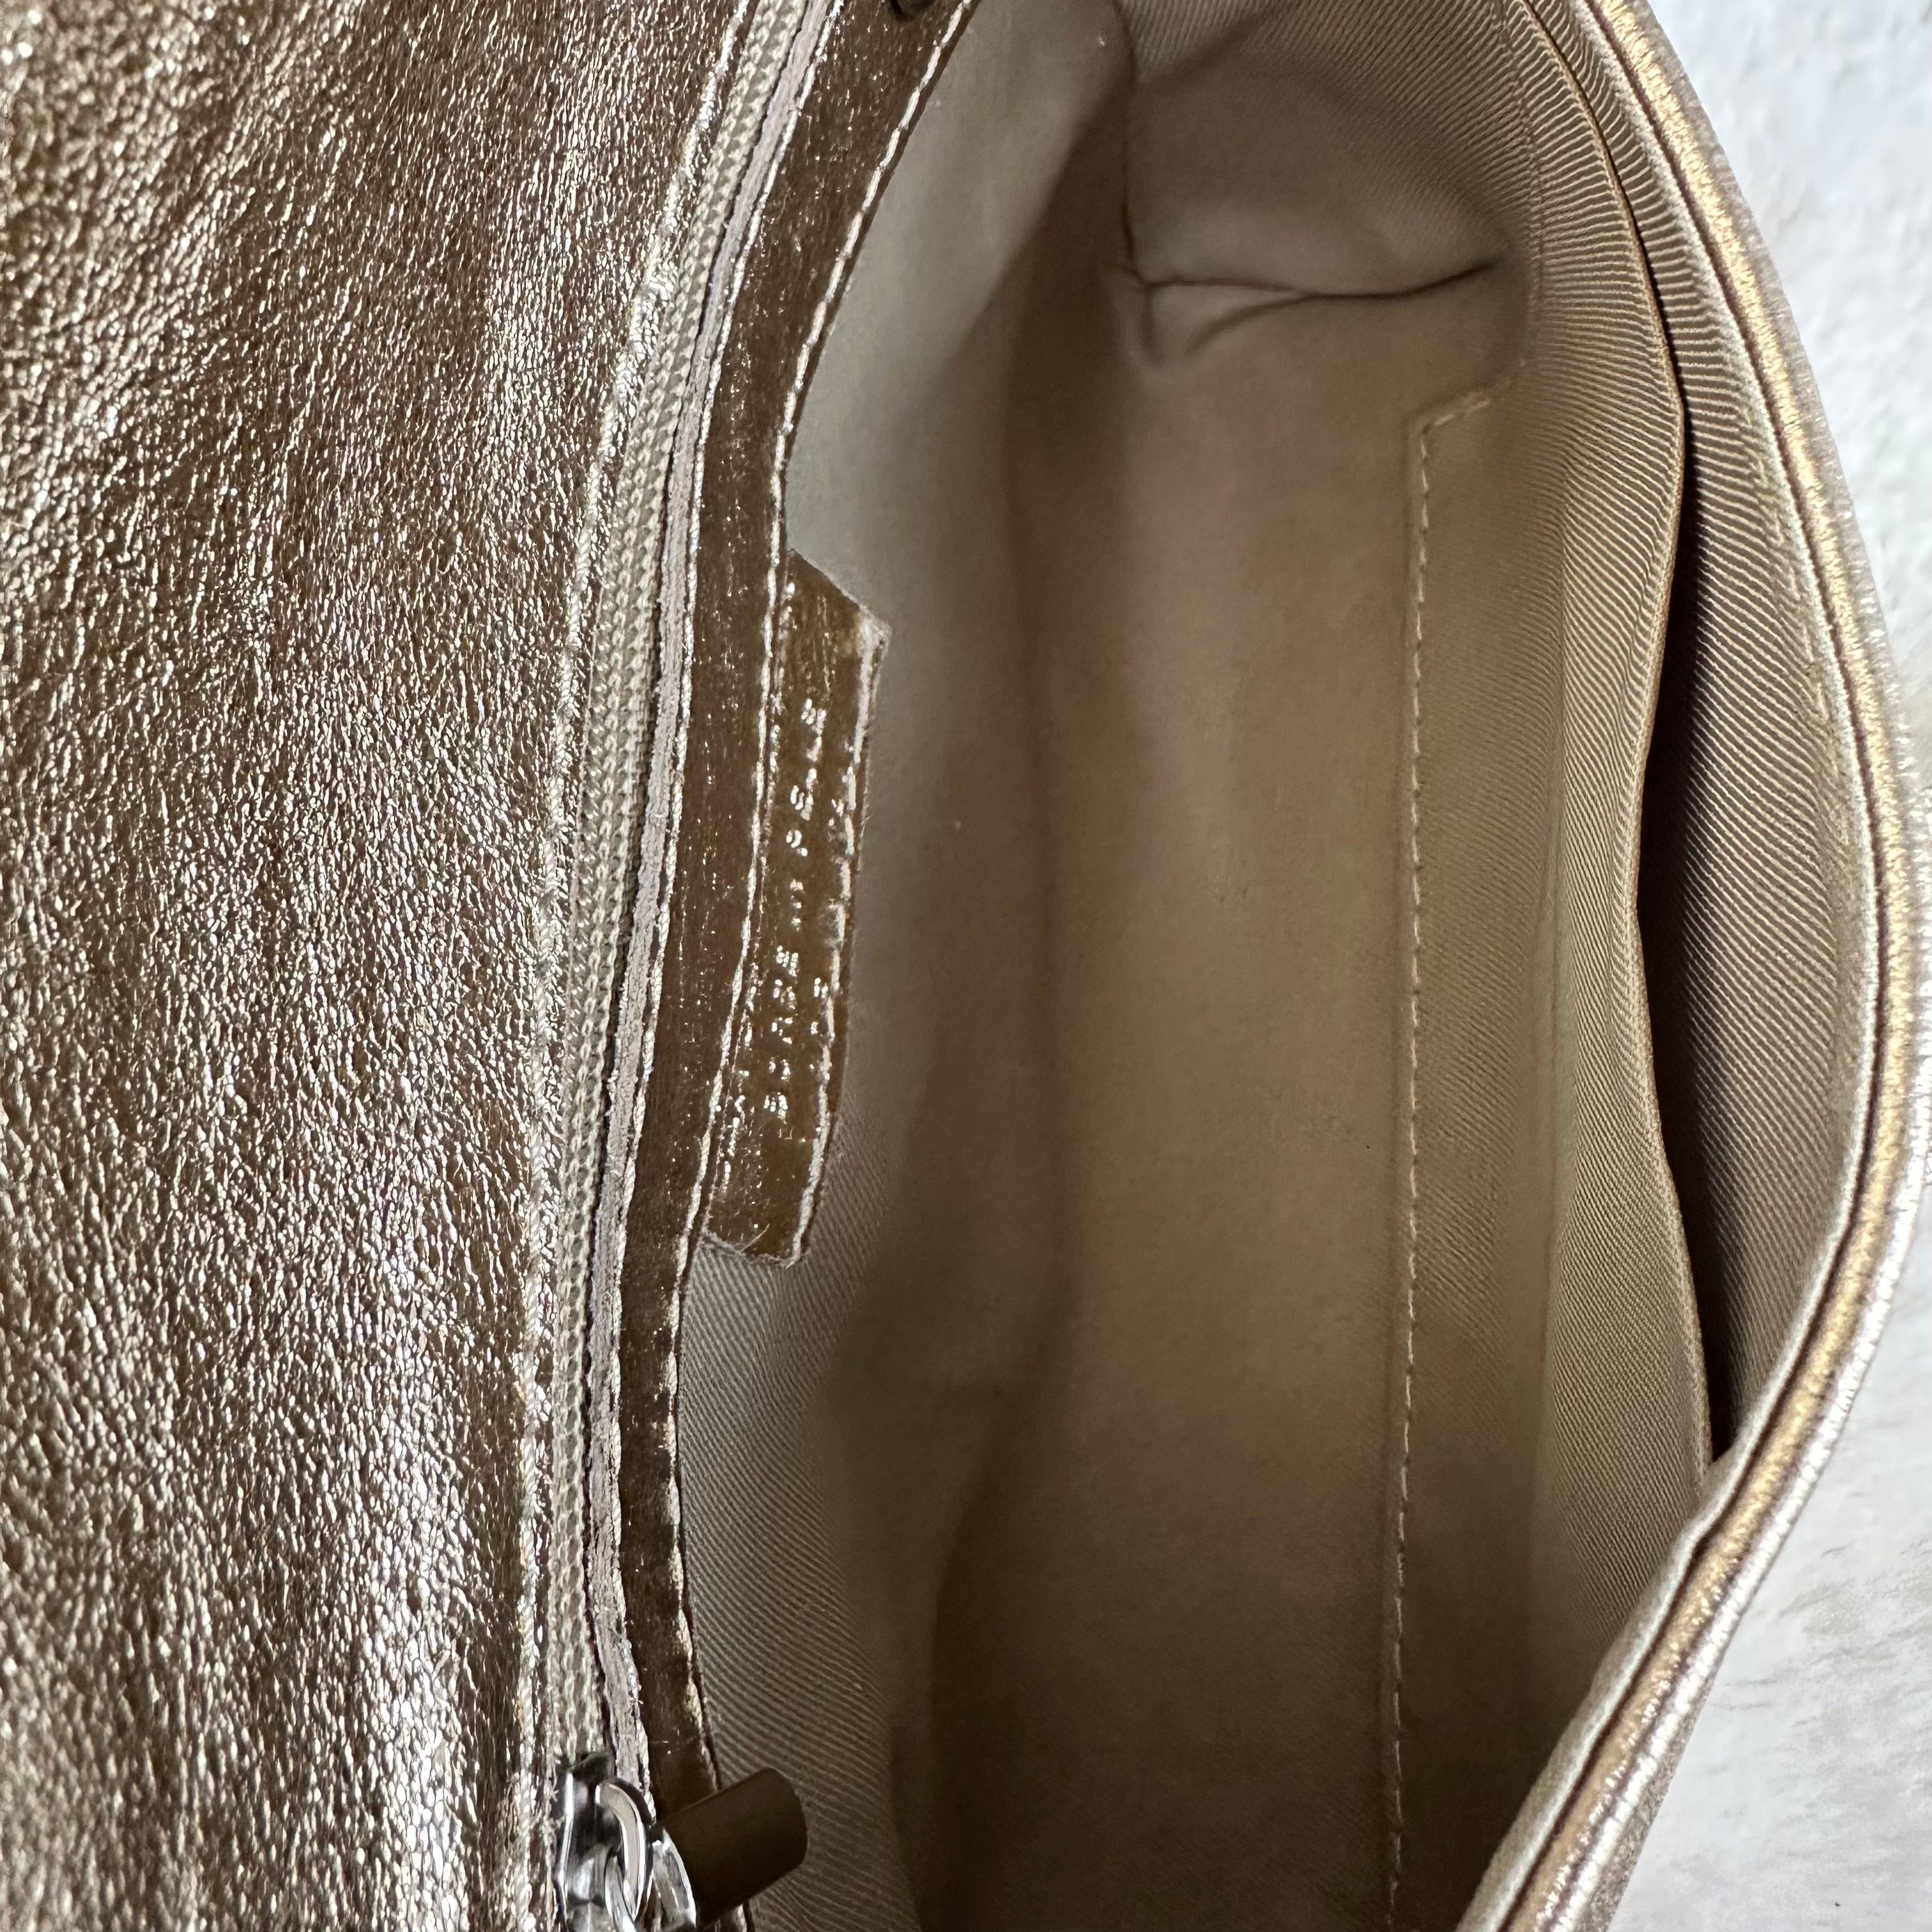 Metallic Gold Italian Leather Clutch Bag with Loop Handle